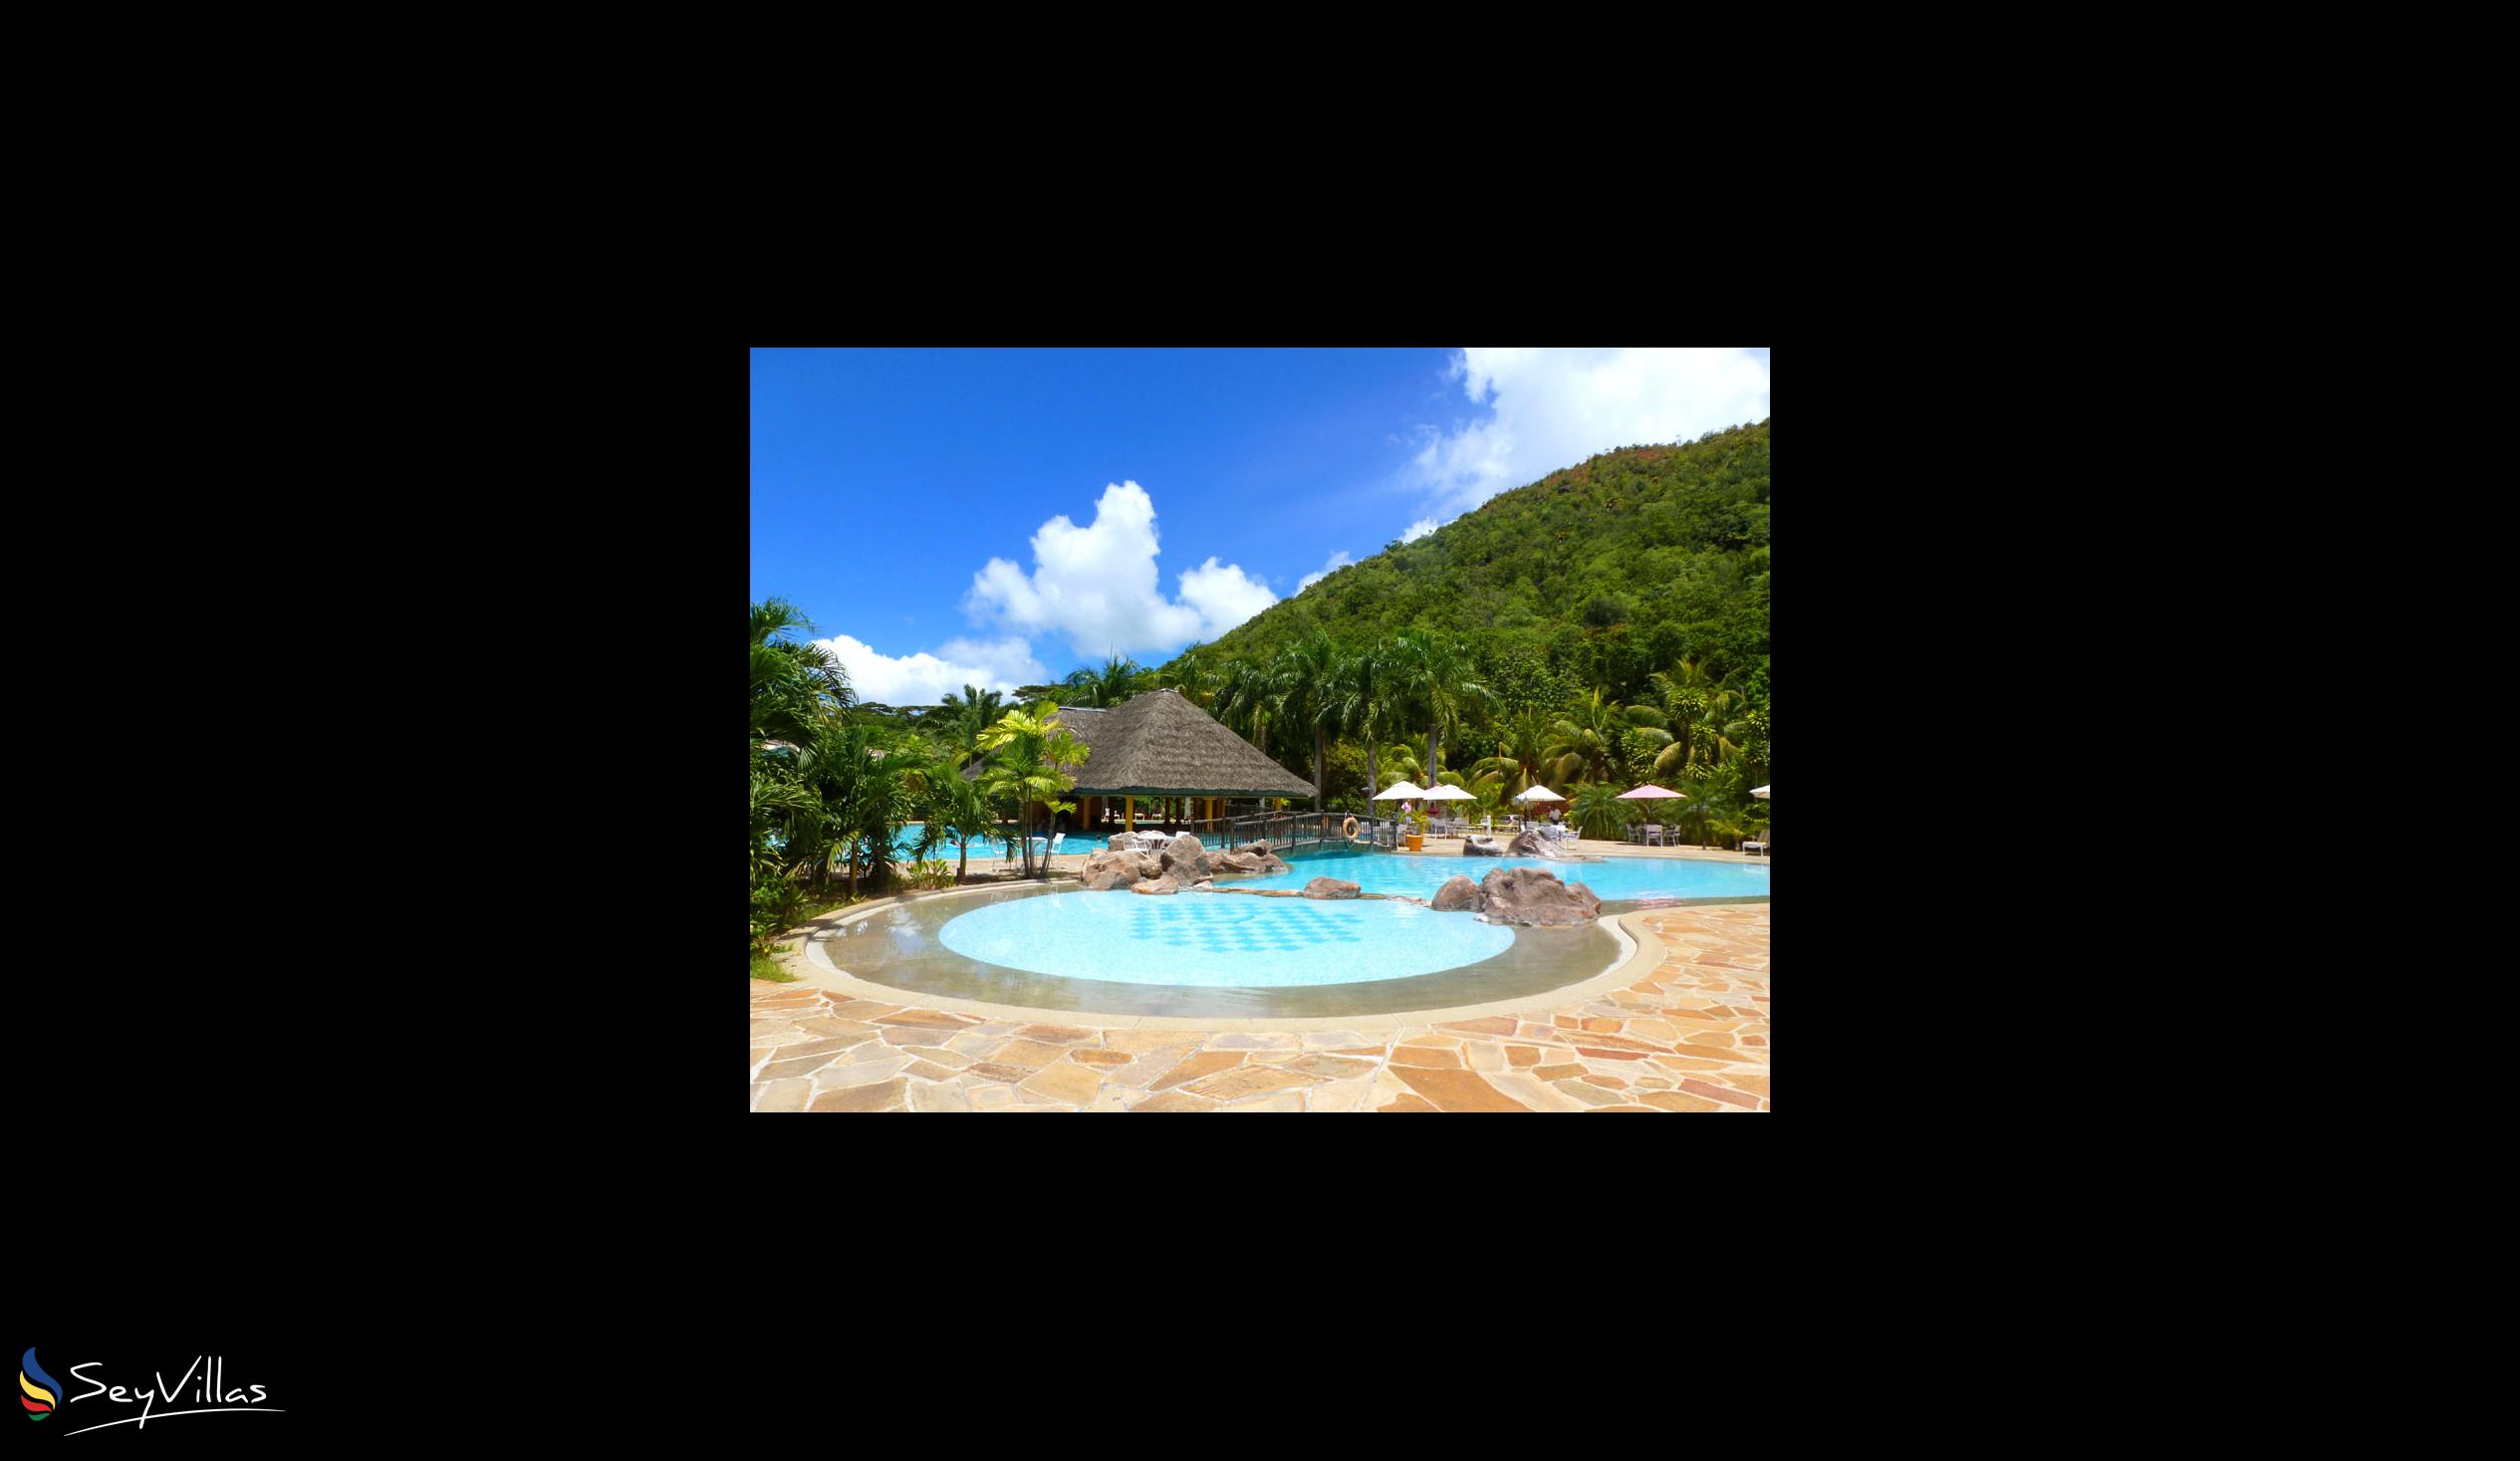 Photo 1: Le Domaine de La Reserve - Outdoor area - Praslin (Seychelles)